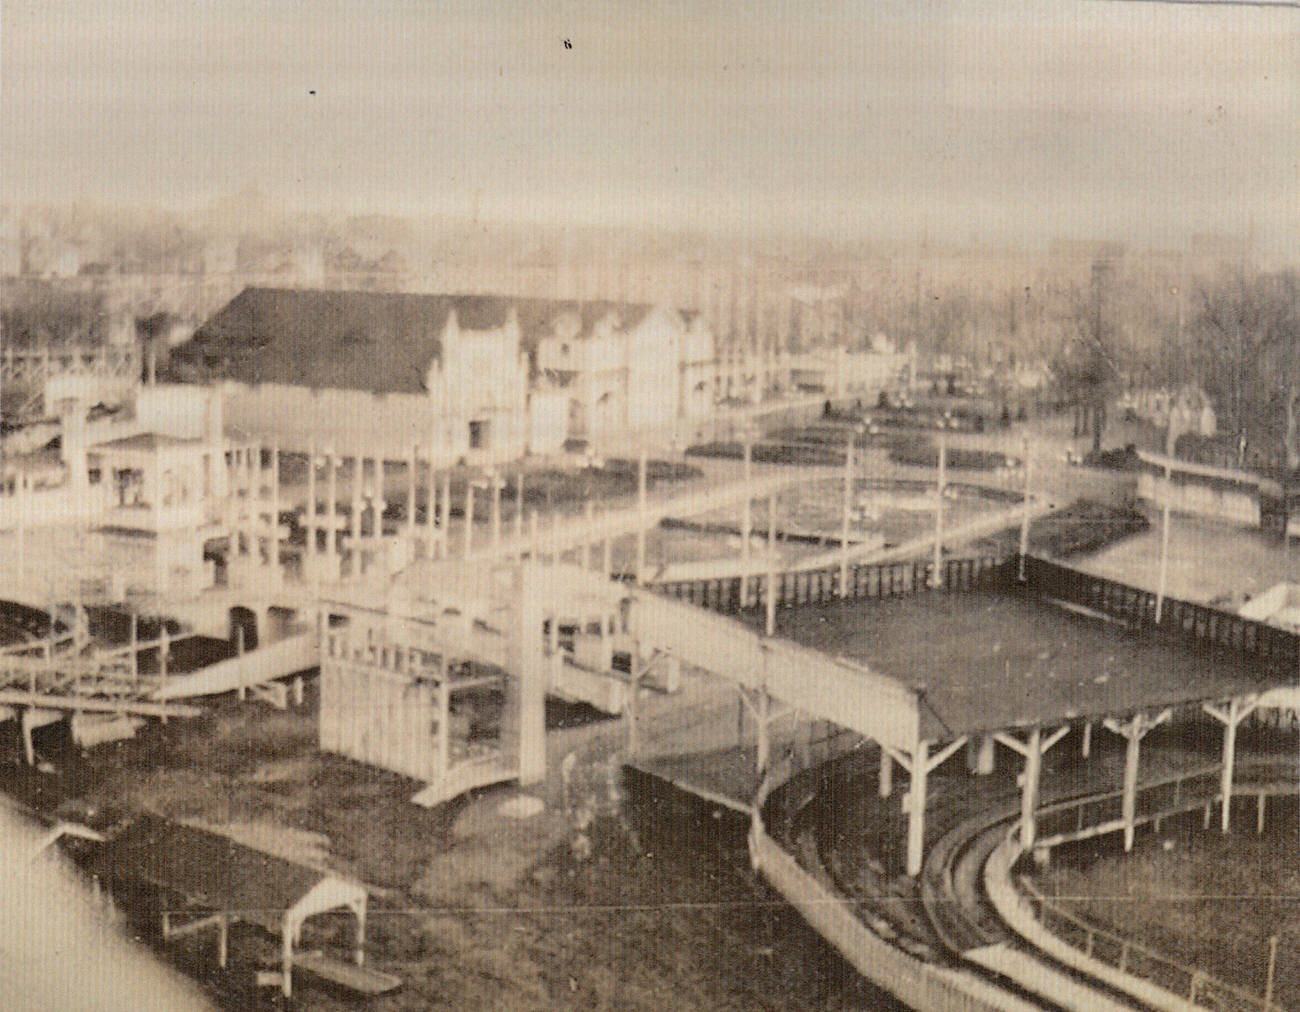 Aerial view of Olentangy Park in Clintonville, Columbus, Ohio, showing amusement park features, 1890s